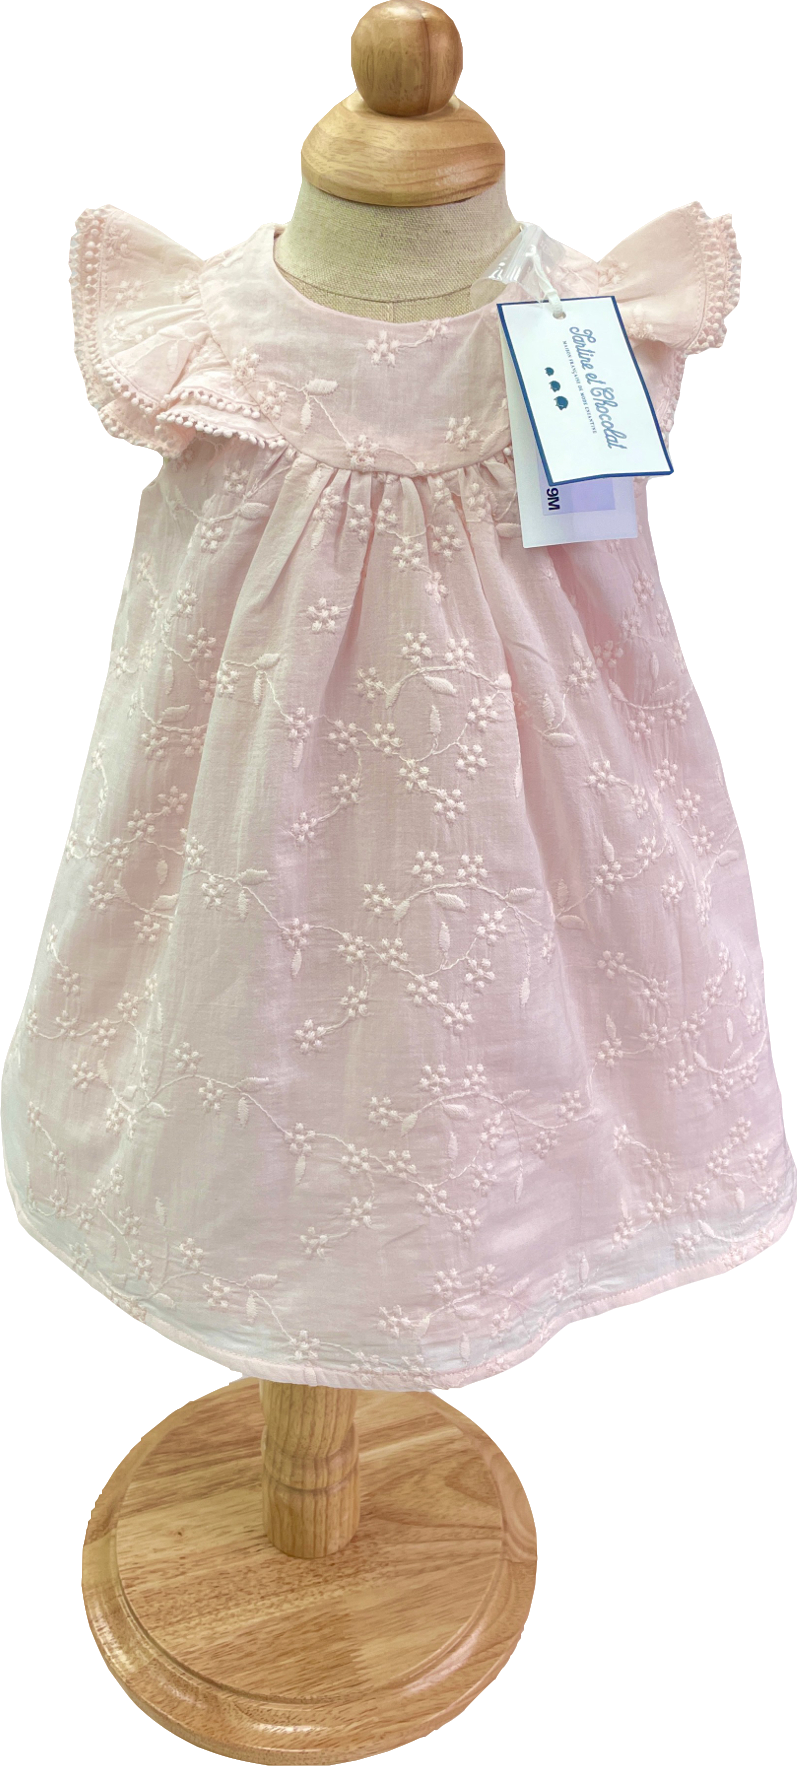 Tartine et Chocolat Pale Rose Pink Embroidered Floral Dress 3-6 Months